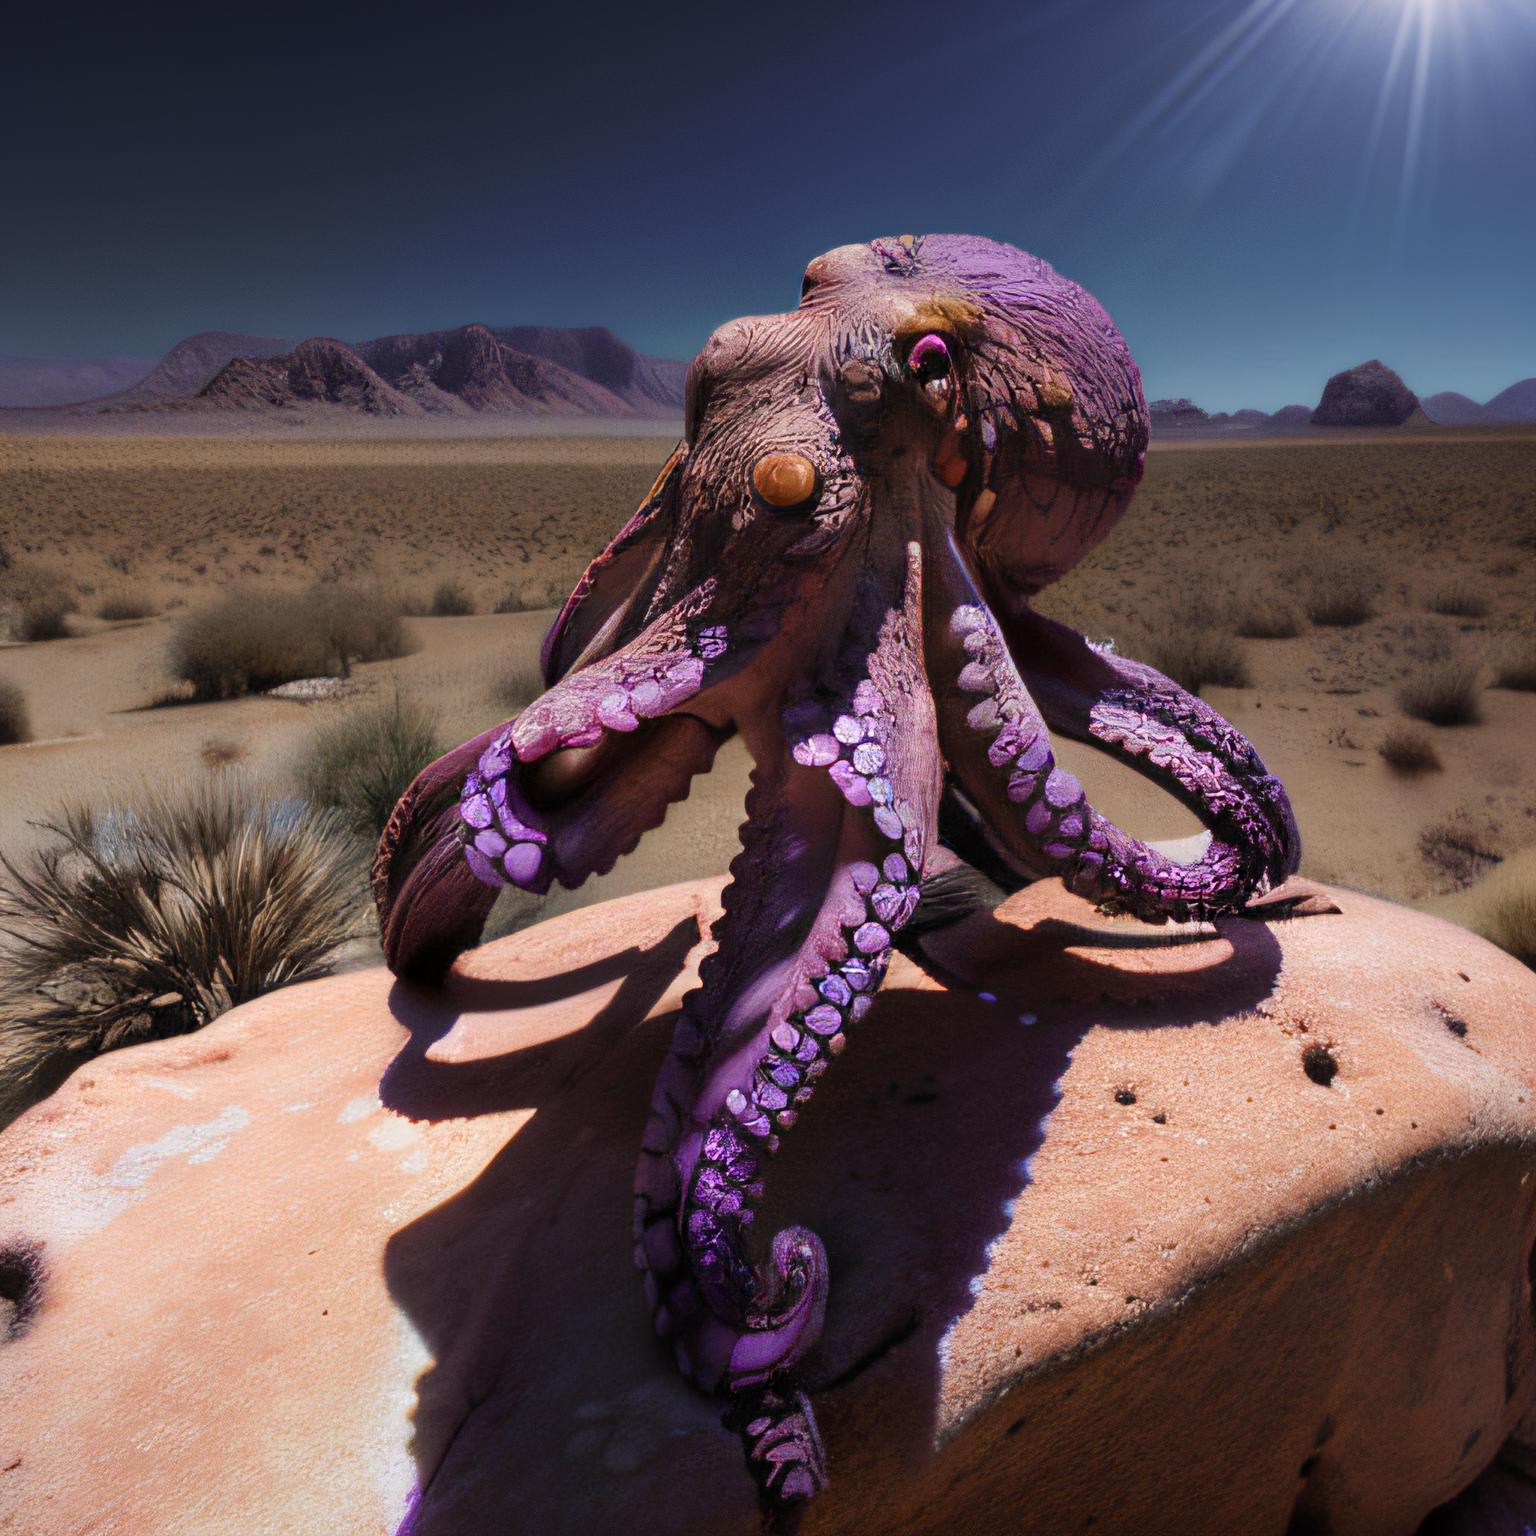 Octopus Lora image by Domnu65